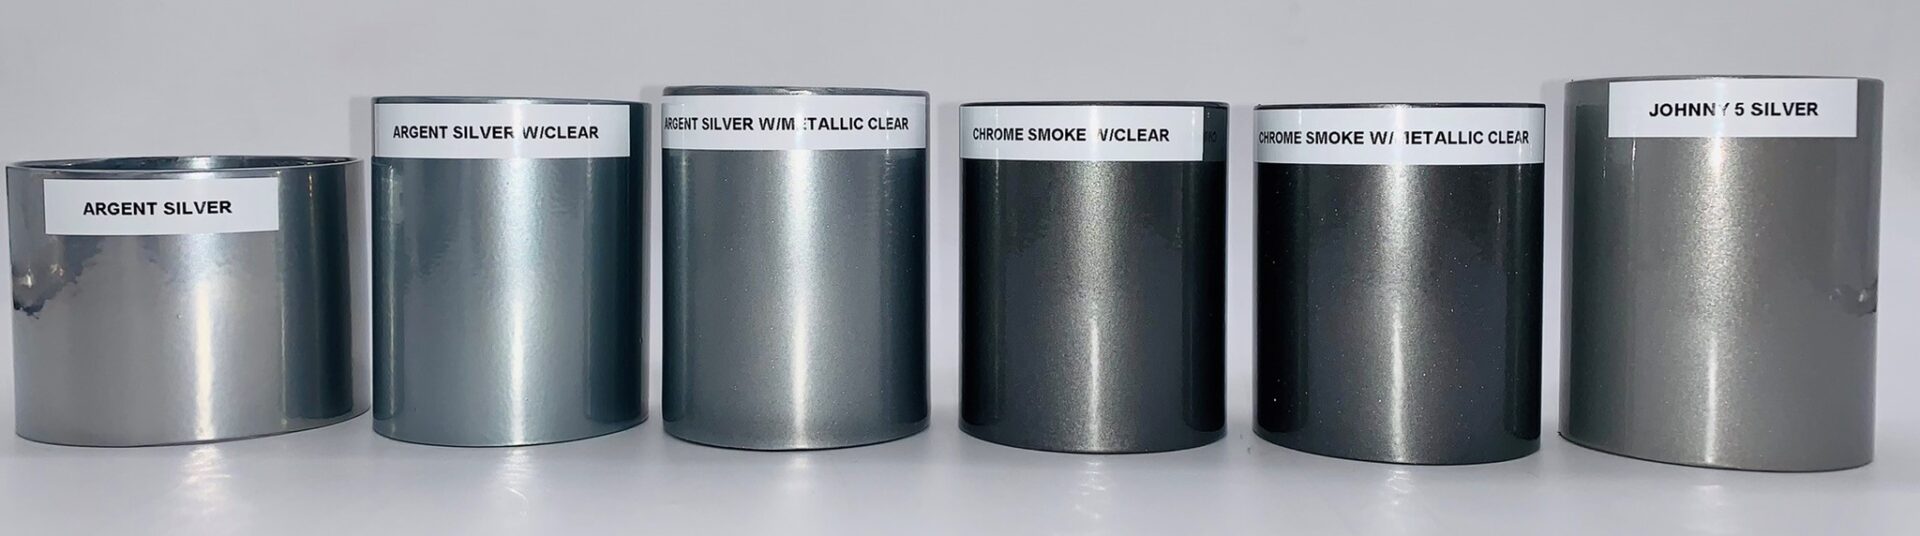 A set of chrome smoke with a metallic clear